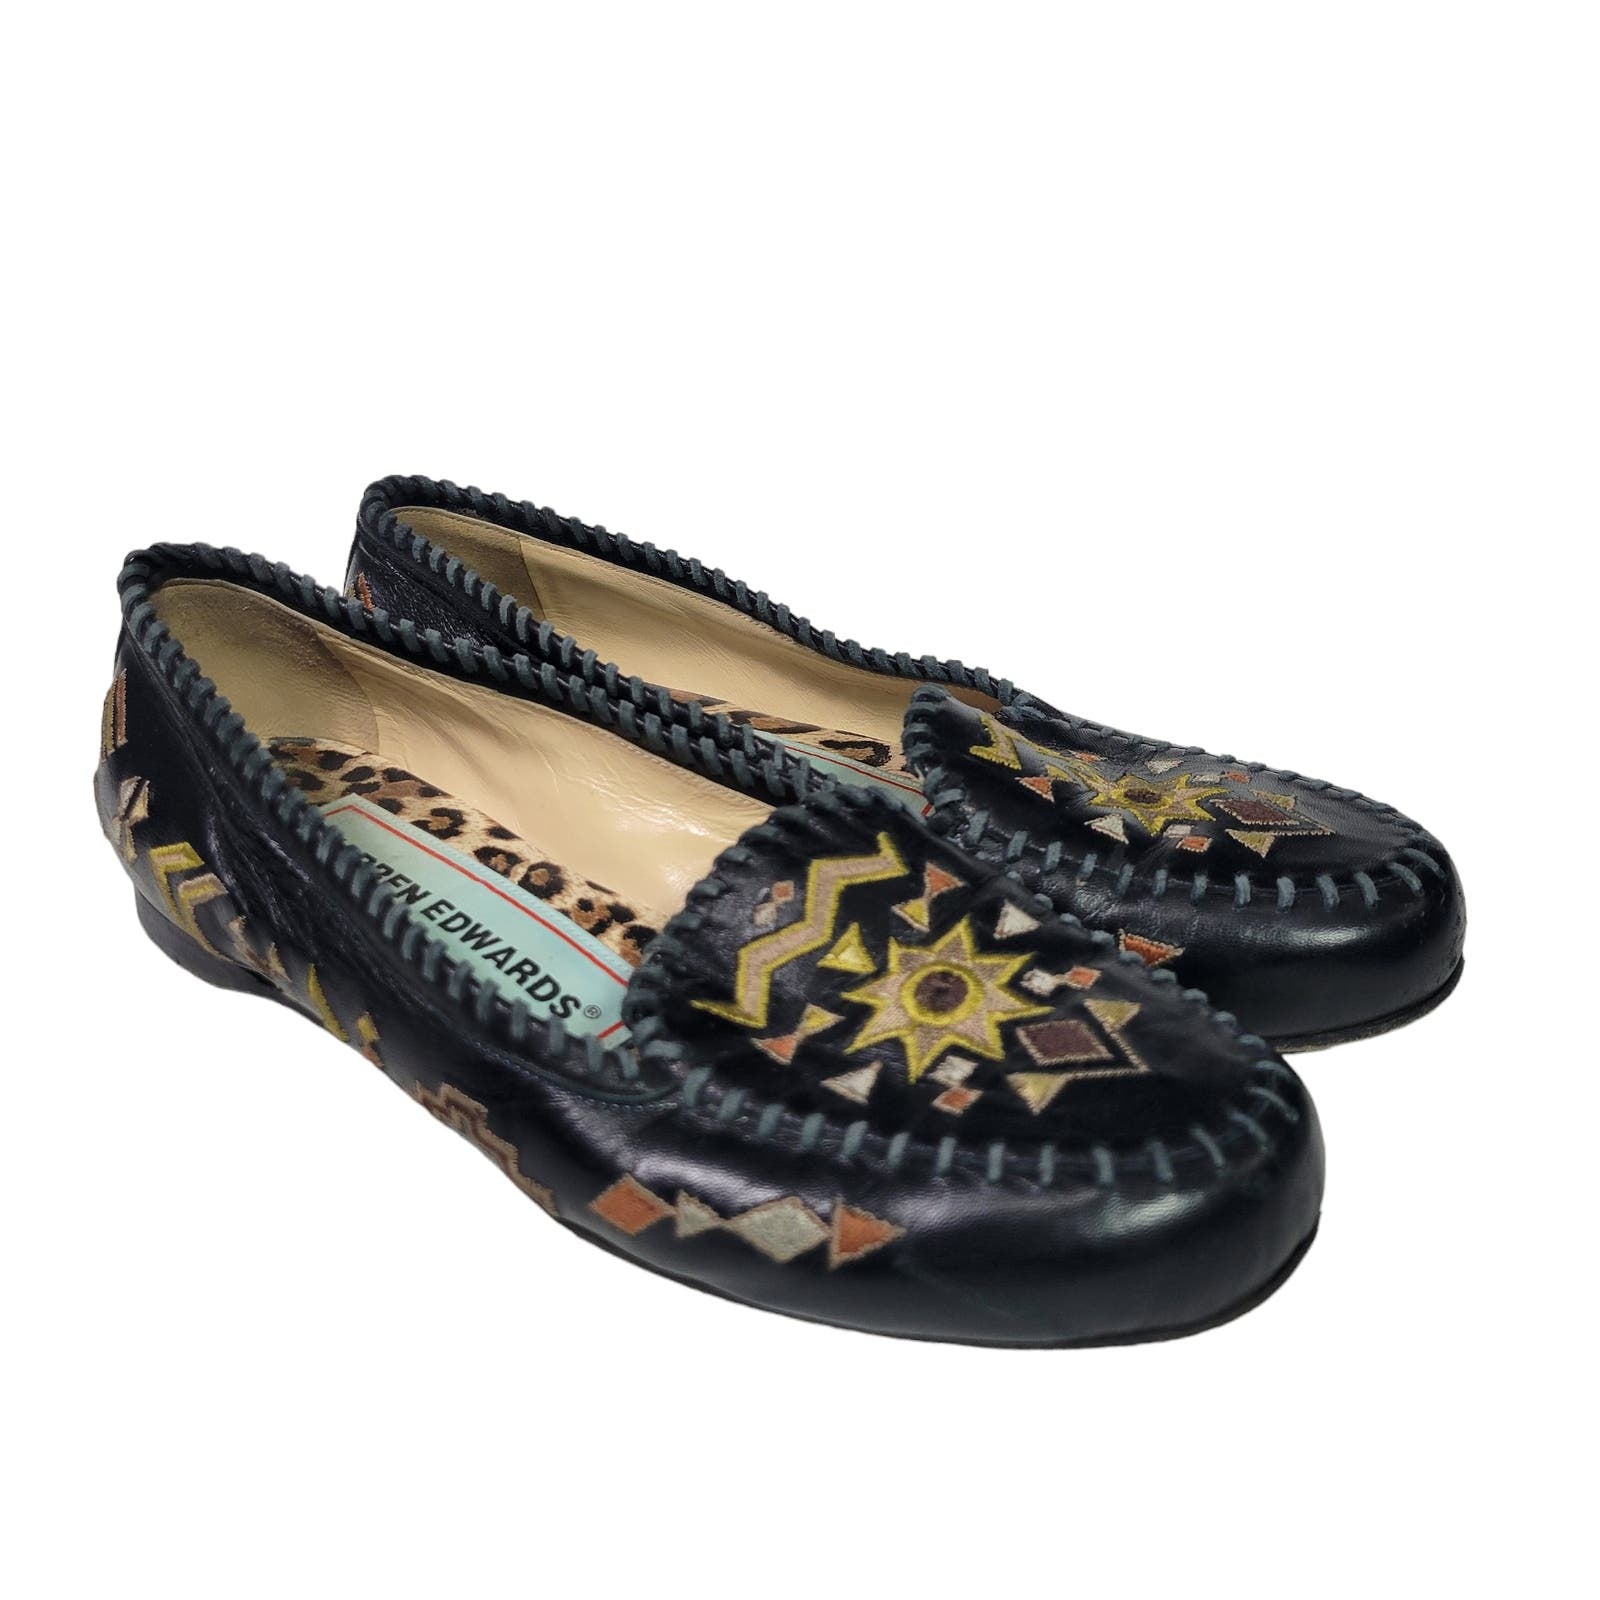 Warren Edwards Sham Vibes Flats Black Moccasin Loafers Embroidery Leather Slip On Size 8